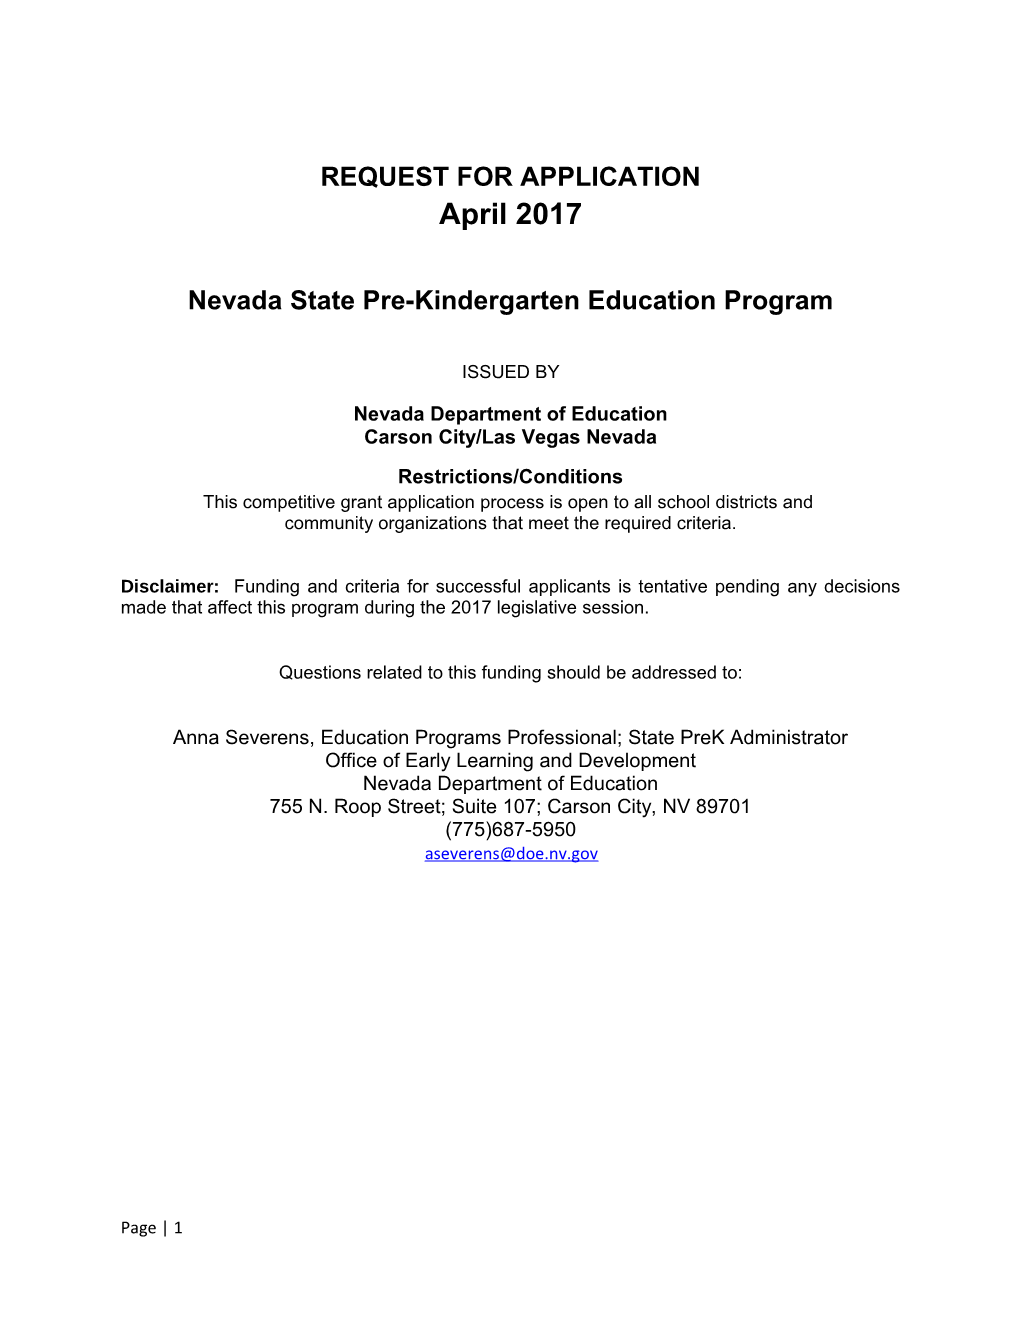 Nevada State Pre-Kindergarten Education Program